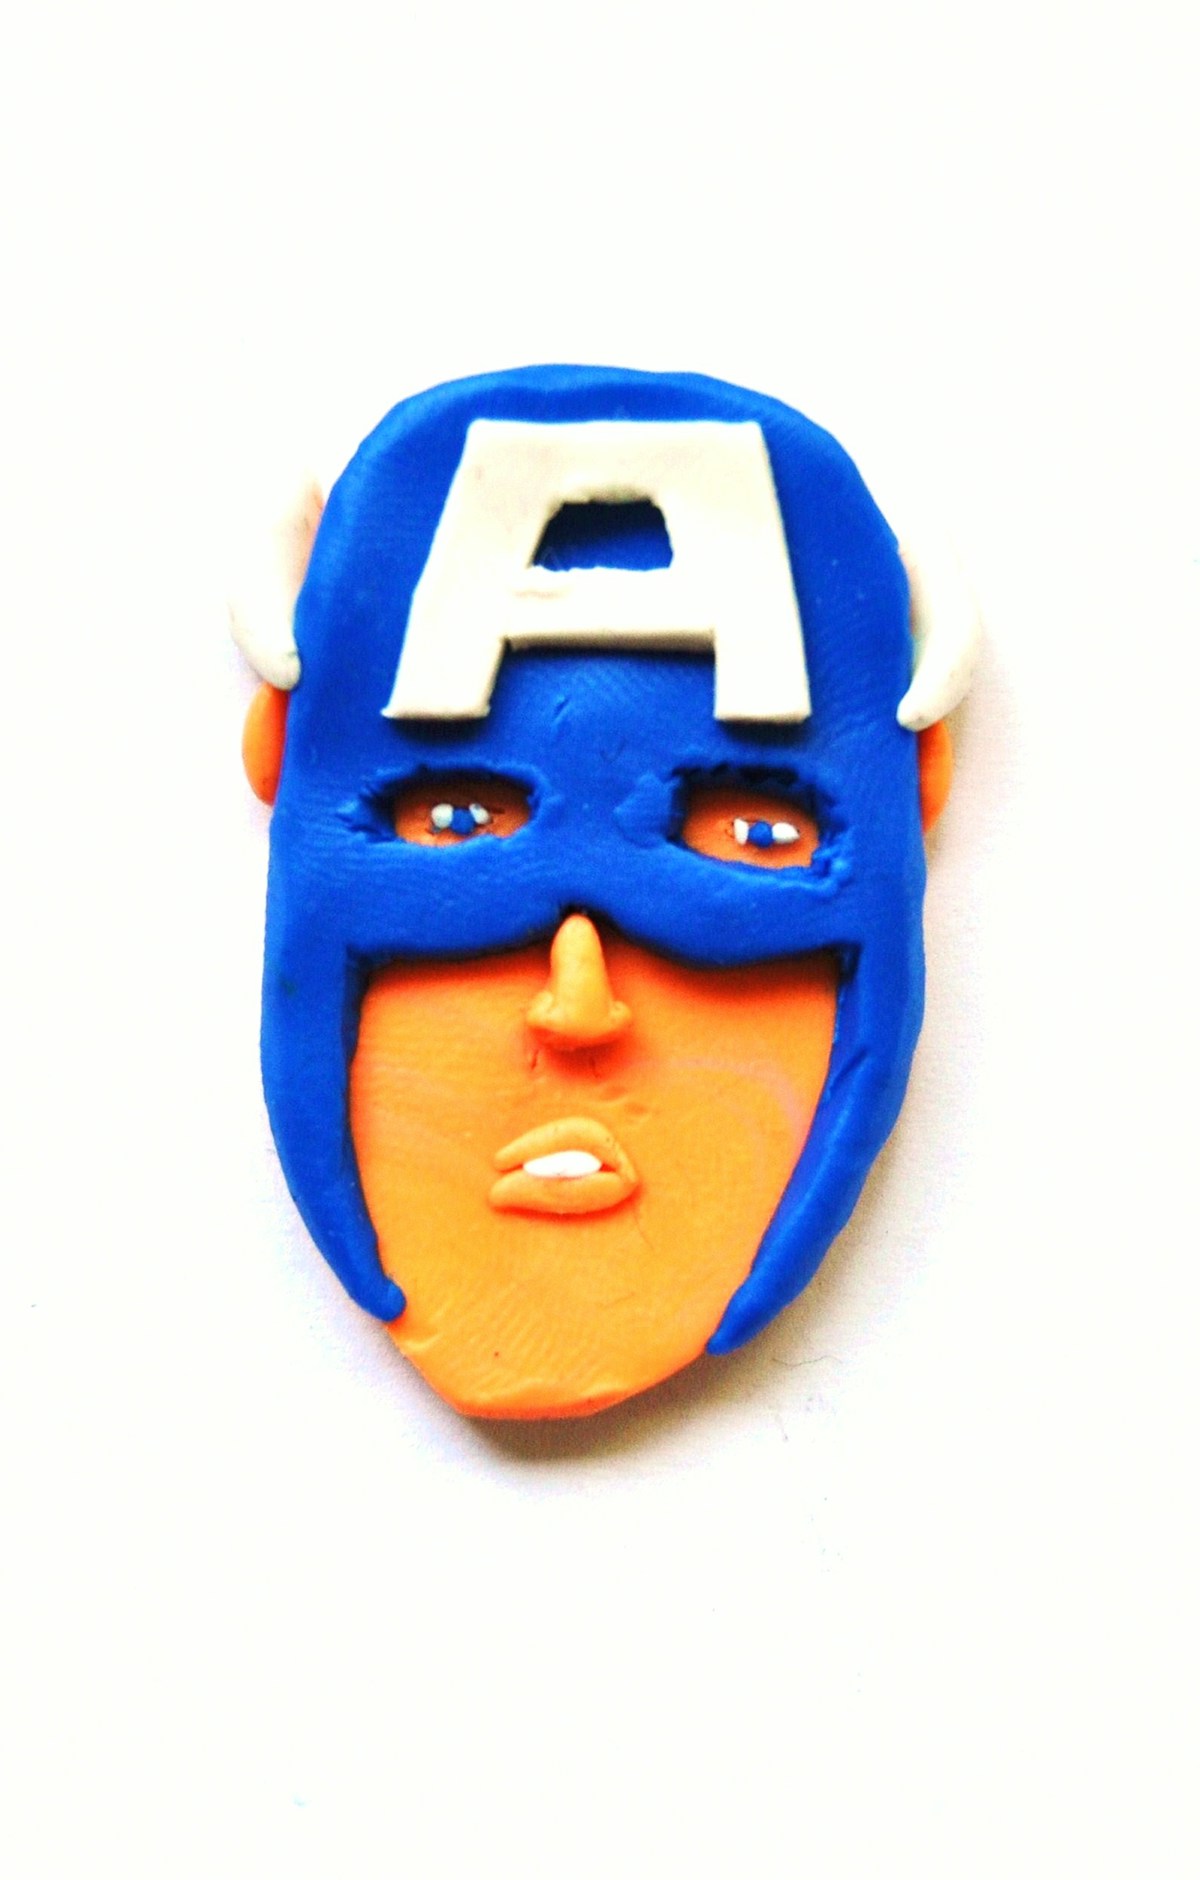 Avengers captain america spider-man Luke Cage iron man wolverine ronin spider-woman Sentry New Avengers Plasticine